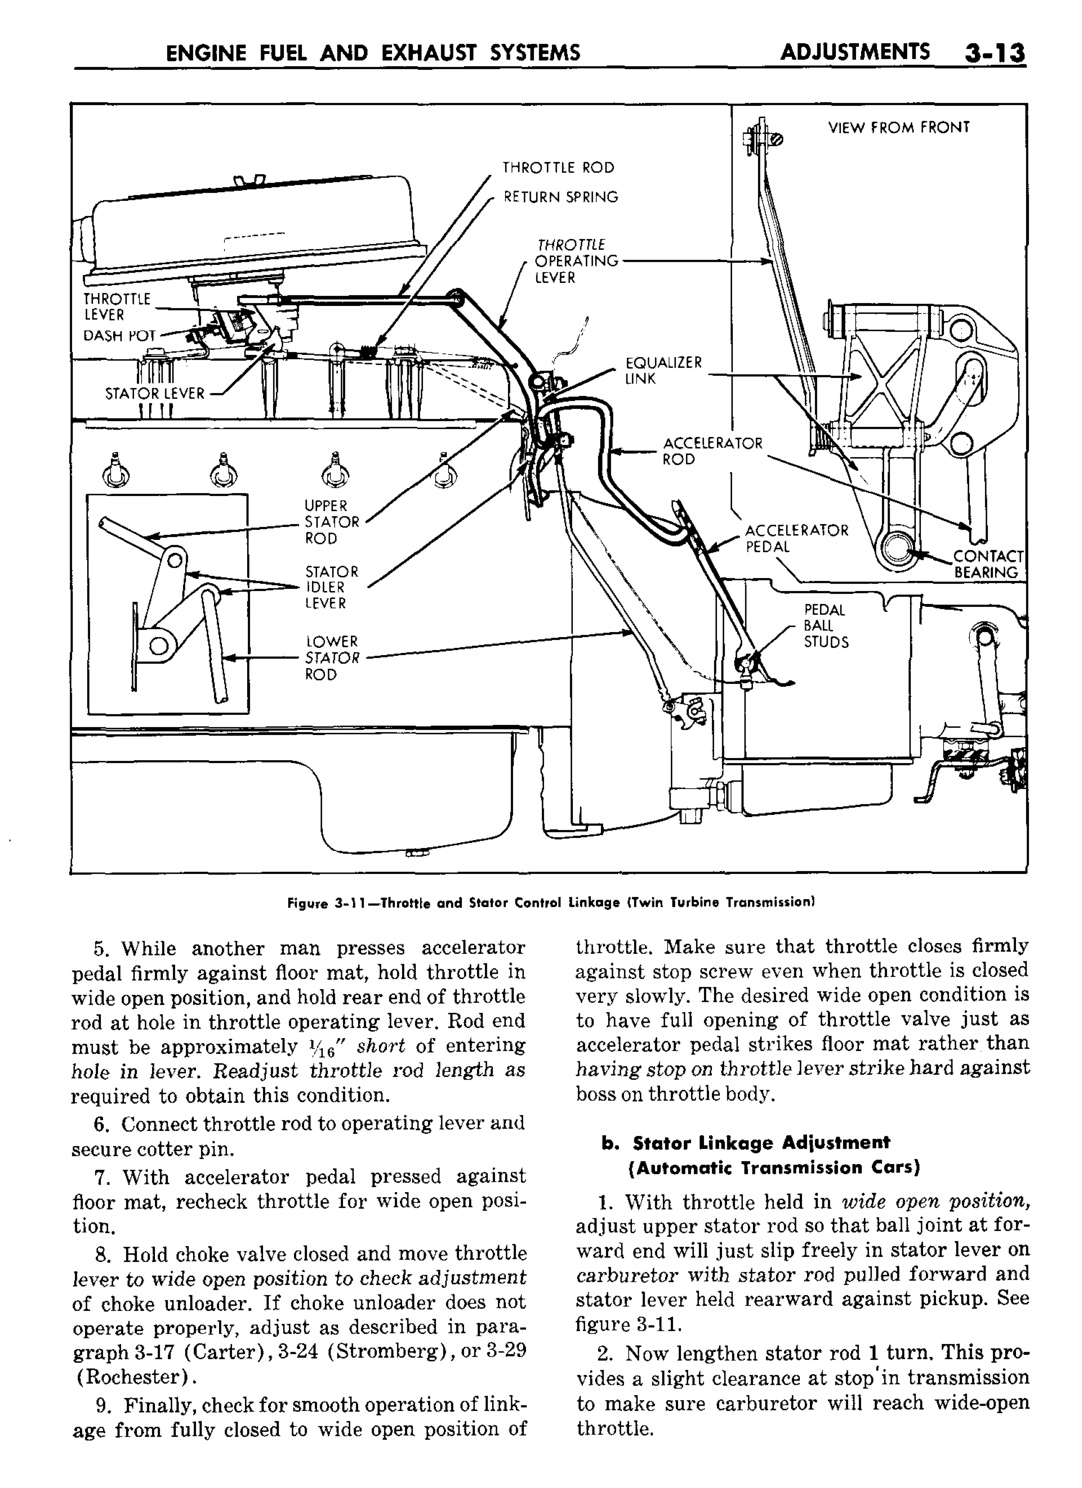 n_04 1959 Buick Shop Manual - Engine Fuel & Exhaust-013-013.jpg